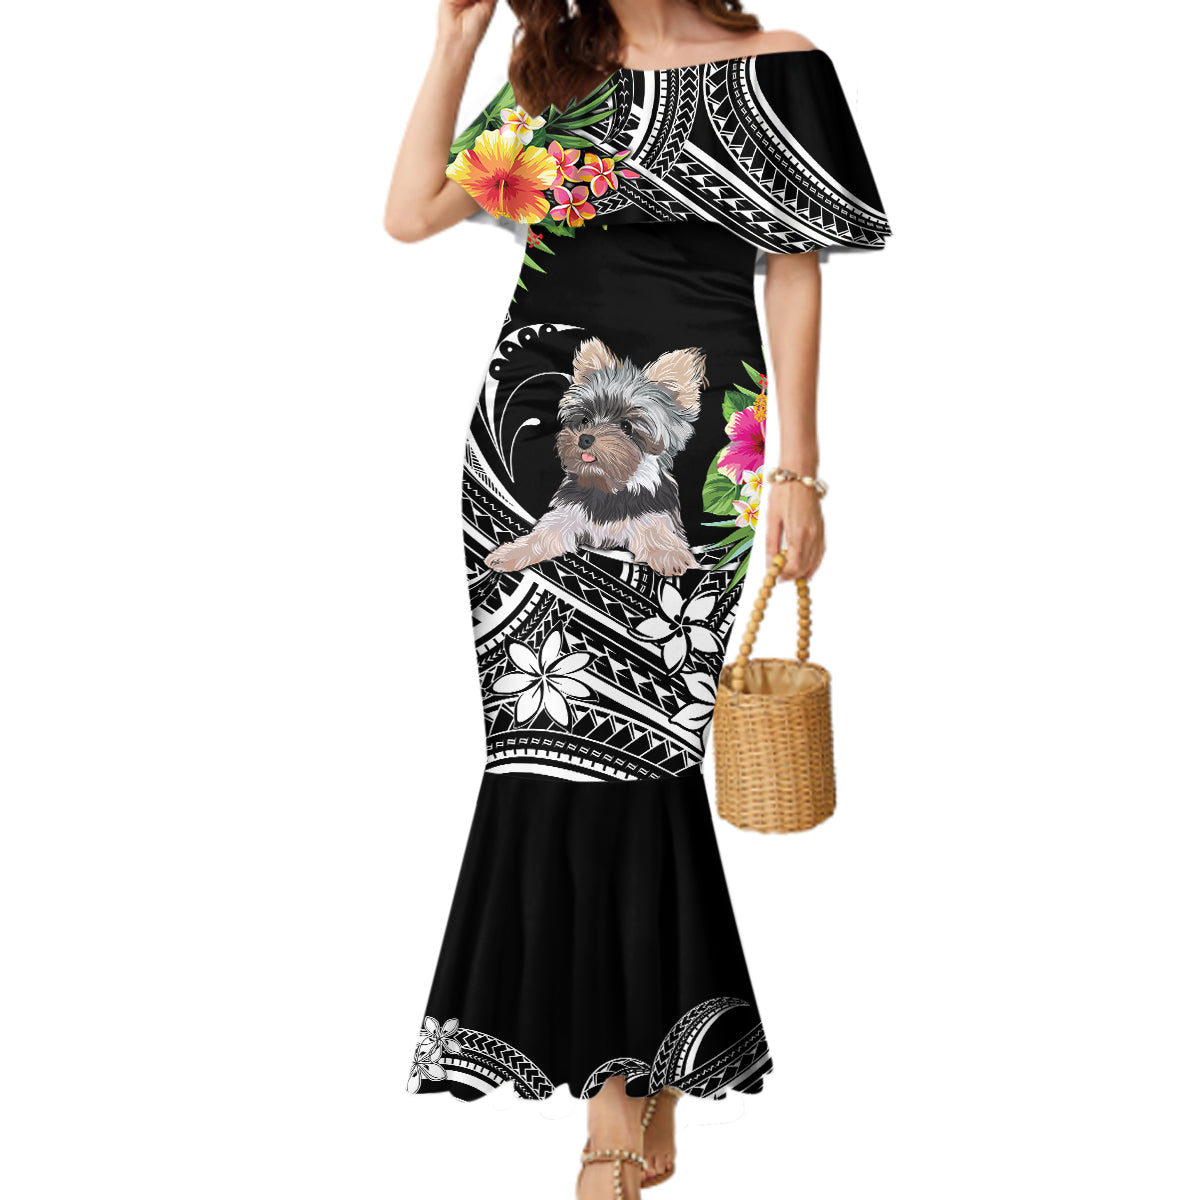 Personalised Polynesian Mermaid Dress With Yorkshire Terrier Floral Style LT7 Women Black - Polynesian Pride